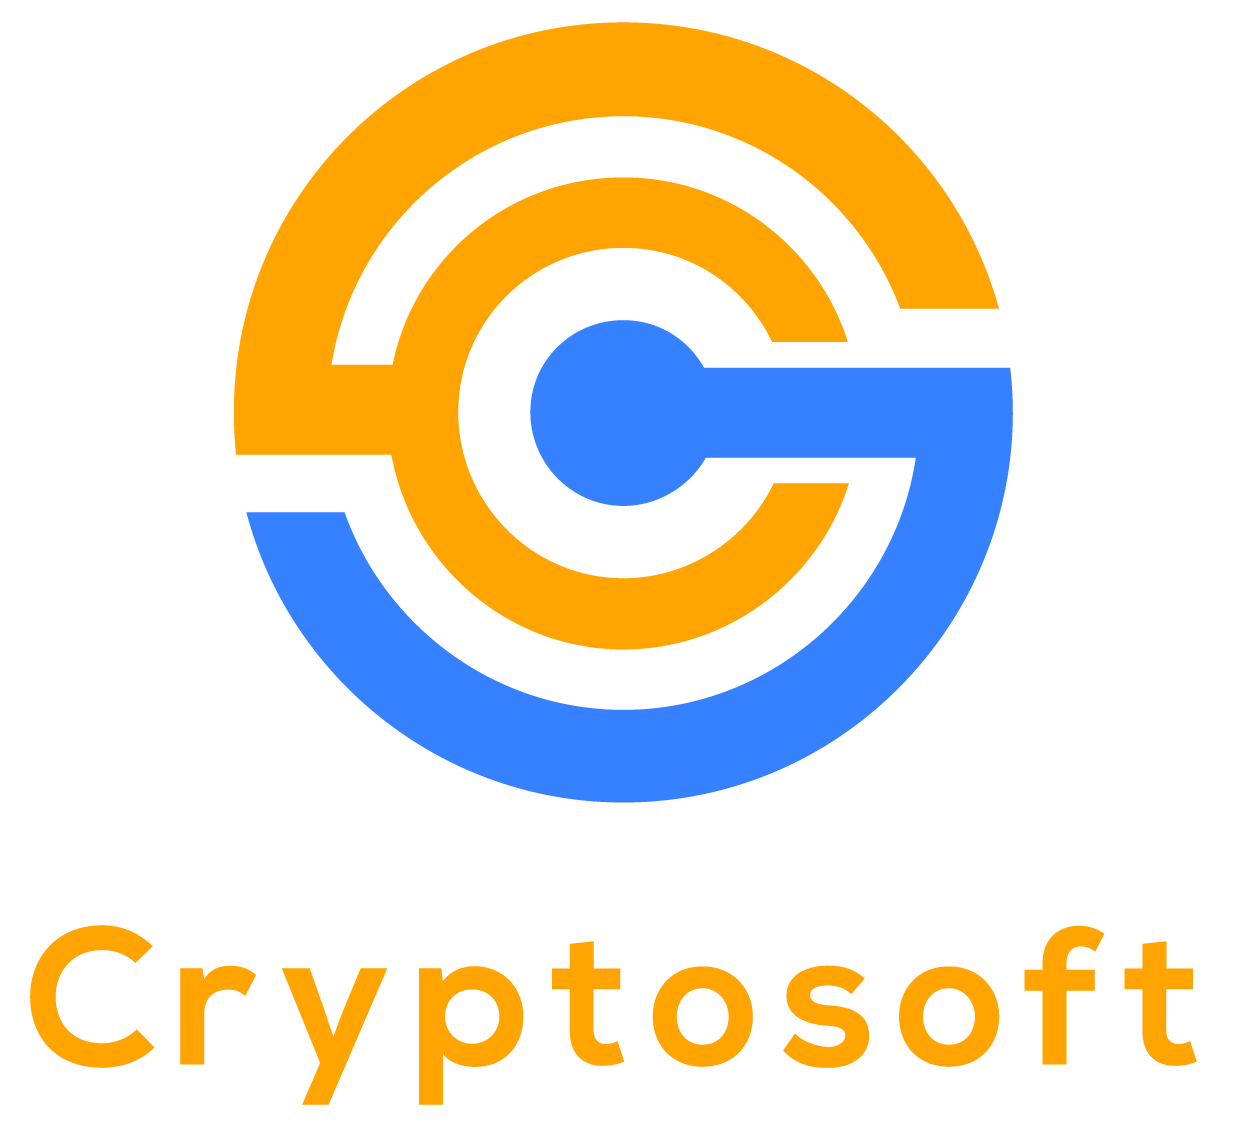 Cryptosoft